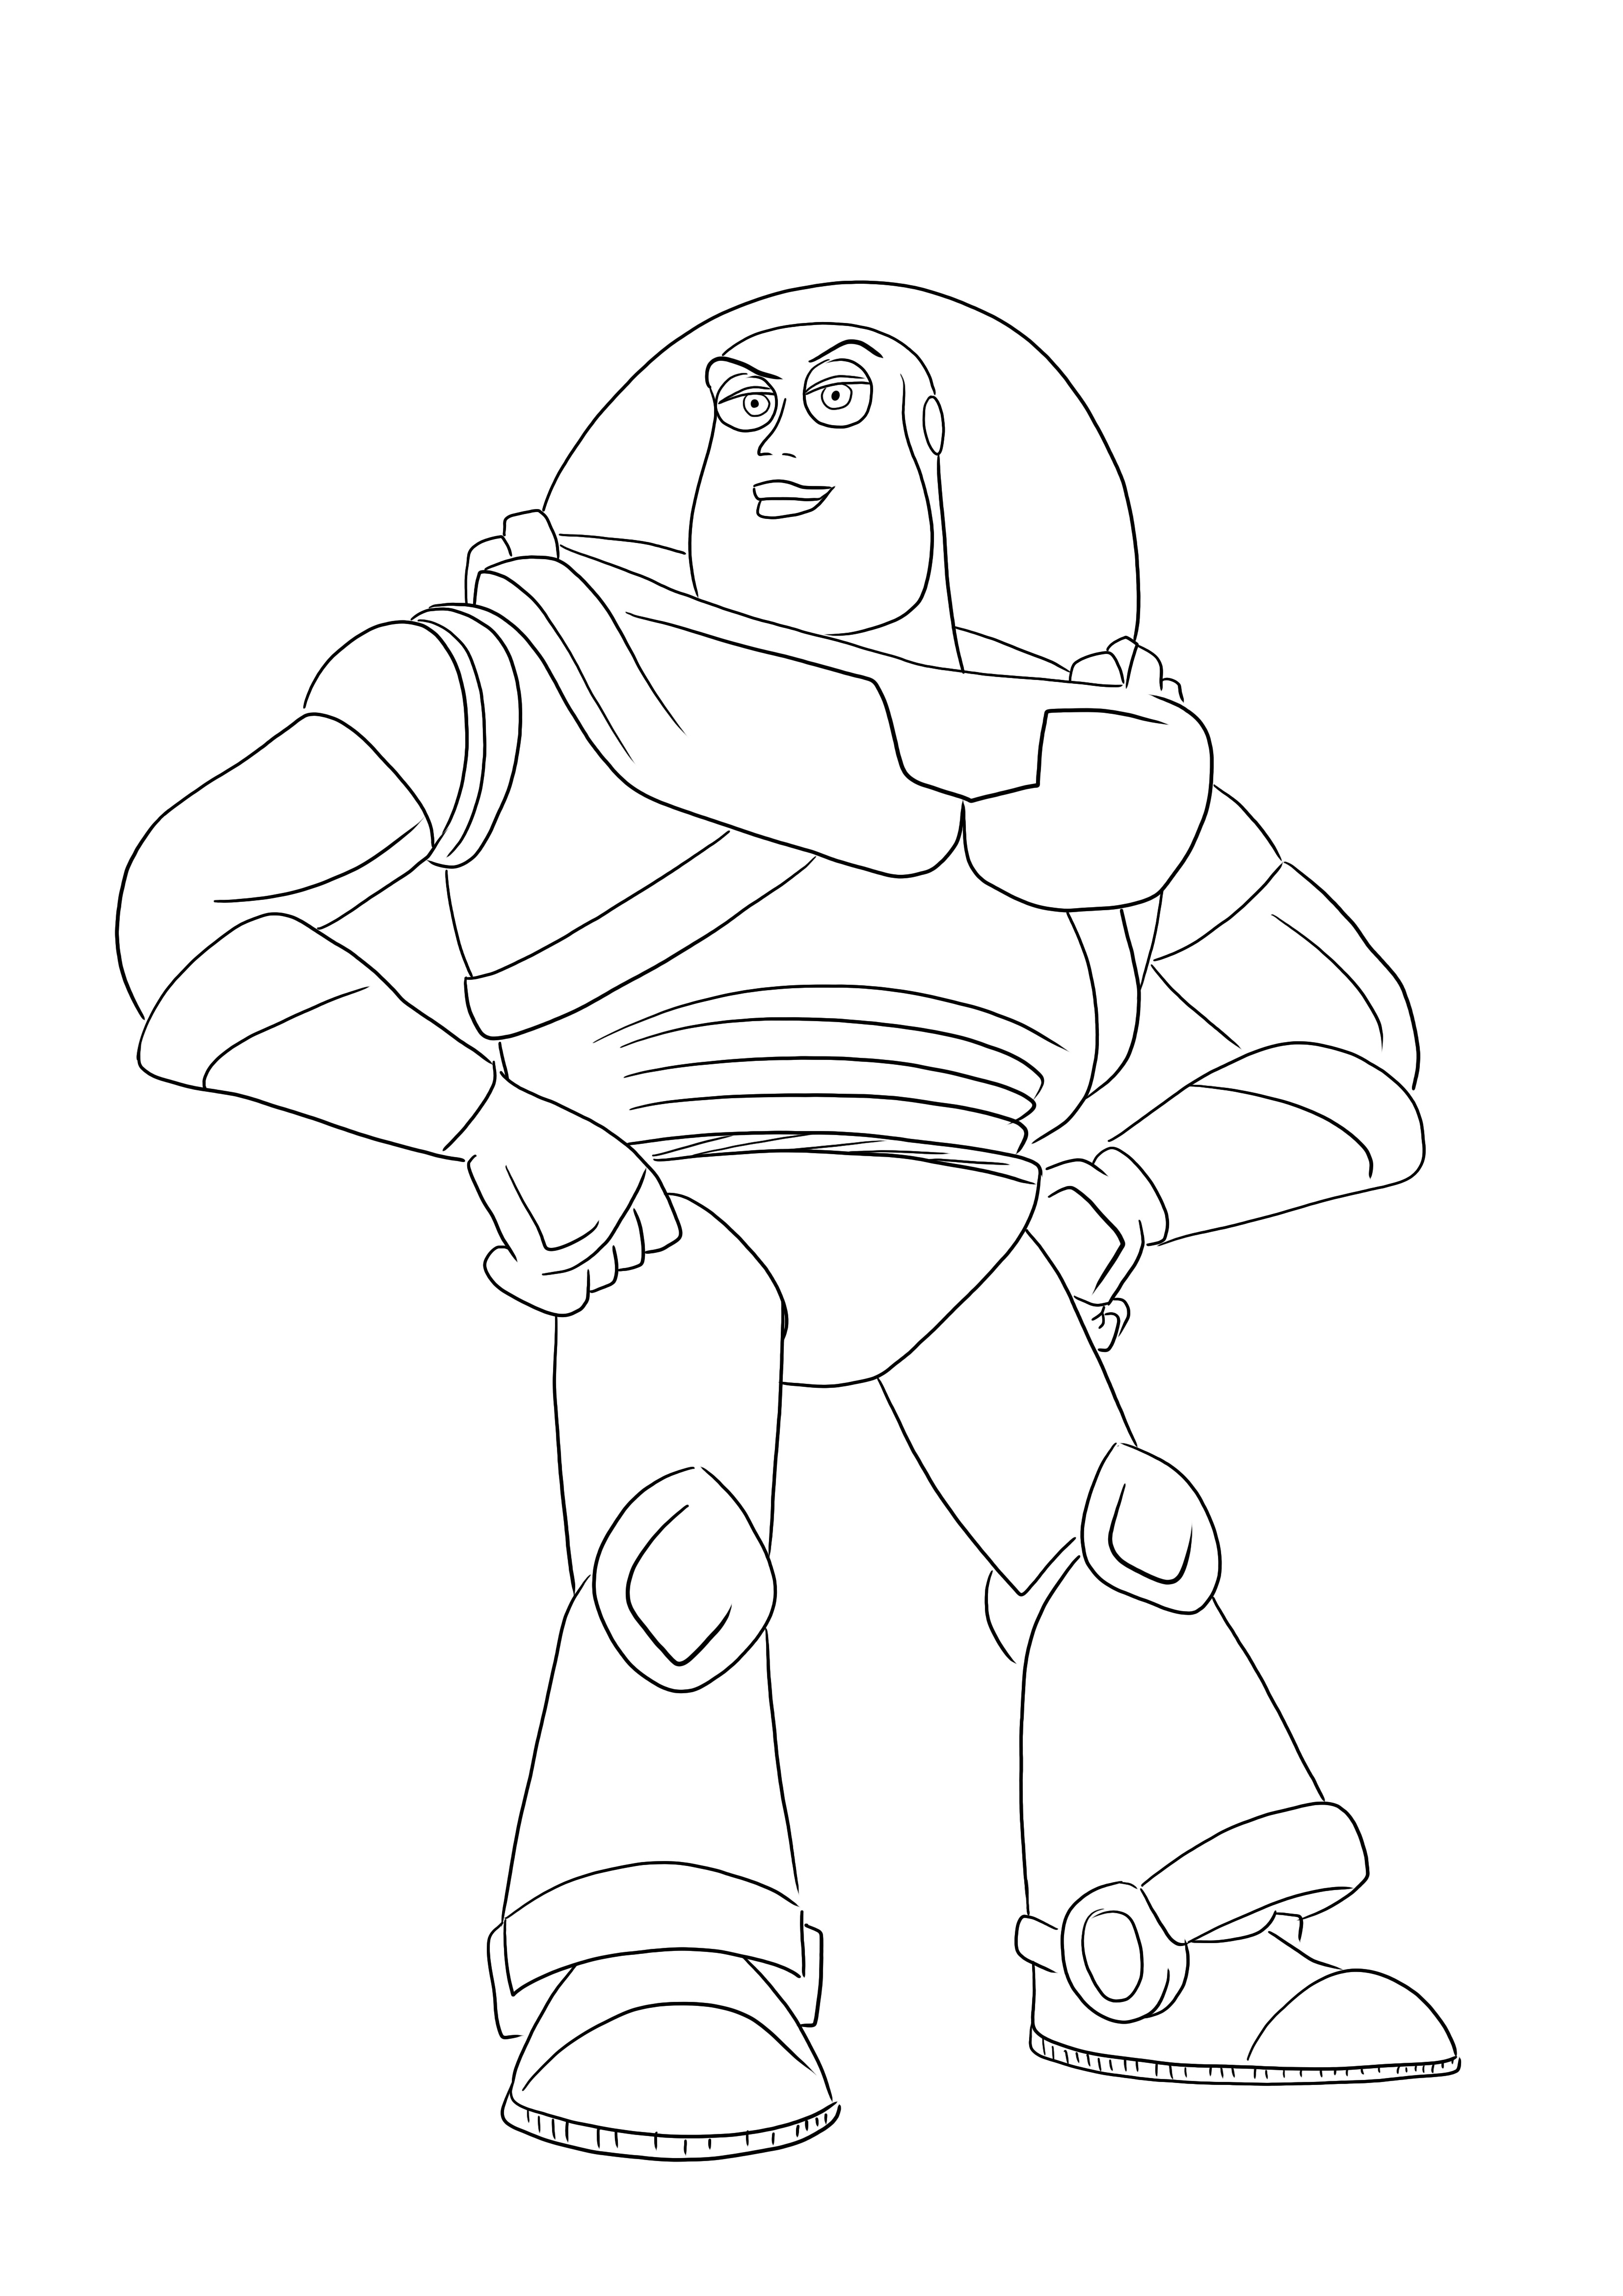 Strong Buzz Lightyear para colorir e imprimir gratuitamente para crianças de todas as idades